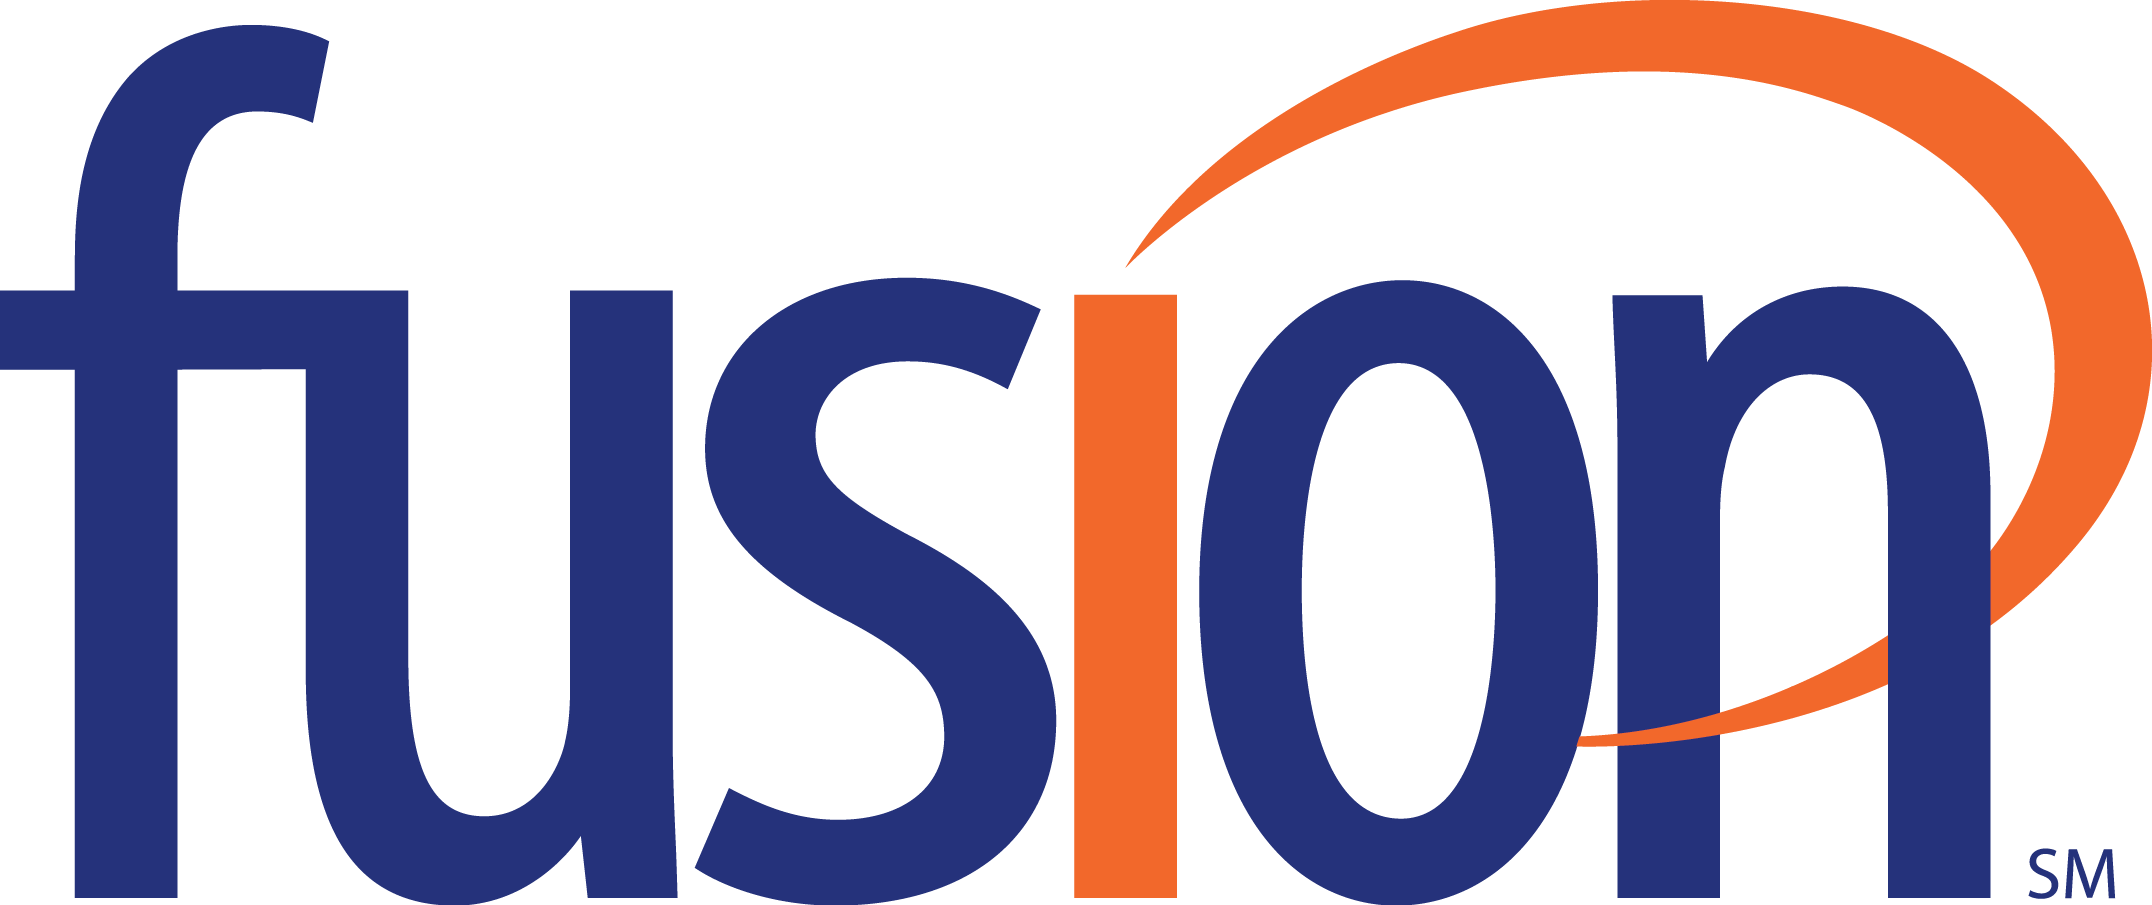 Fusion Channel Partner Logo